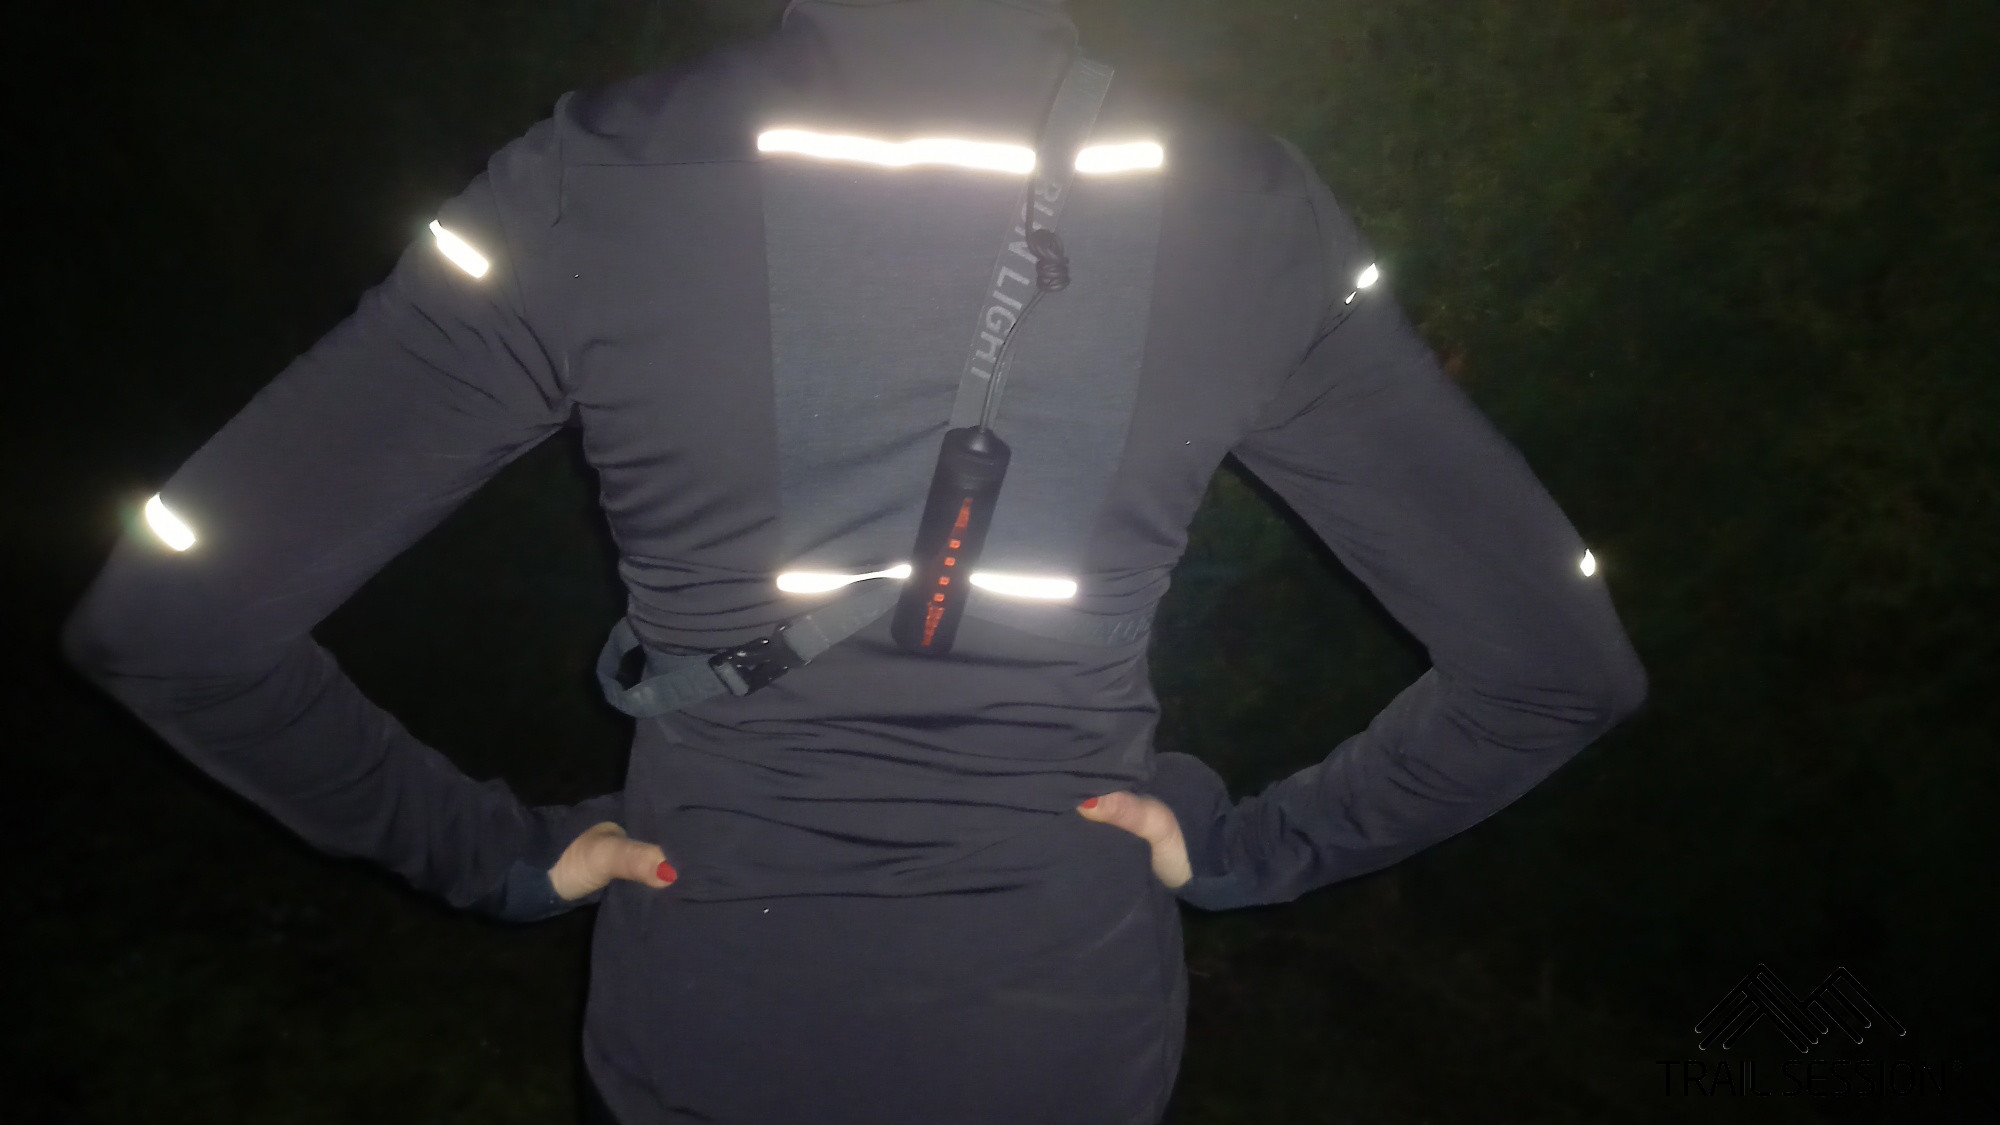 Promo Kiprun lampe de running pectorale run light 250 chez Decathlon